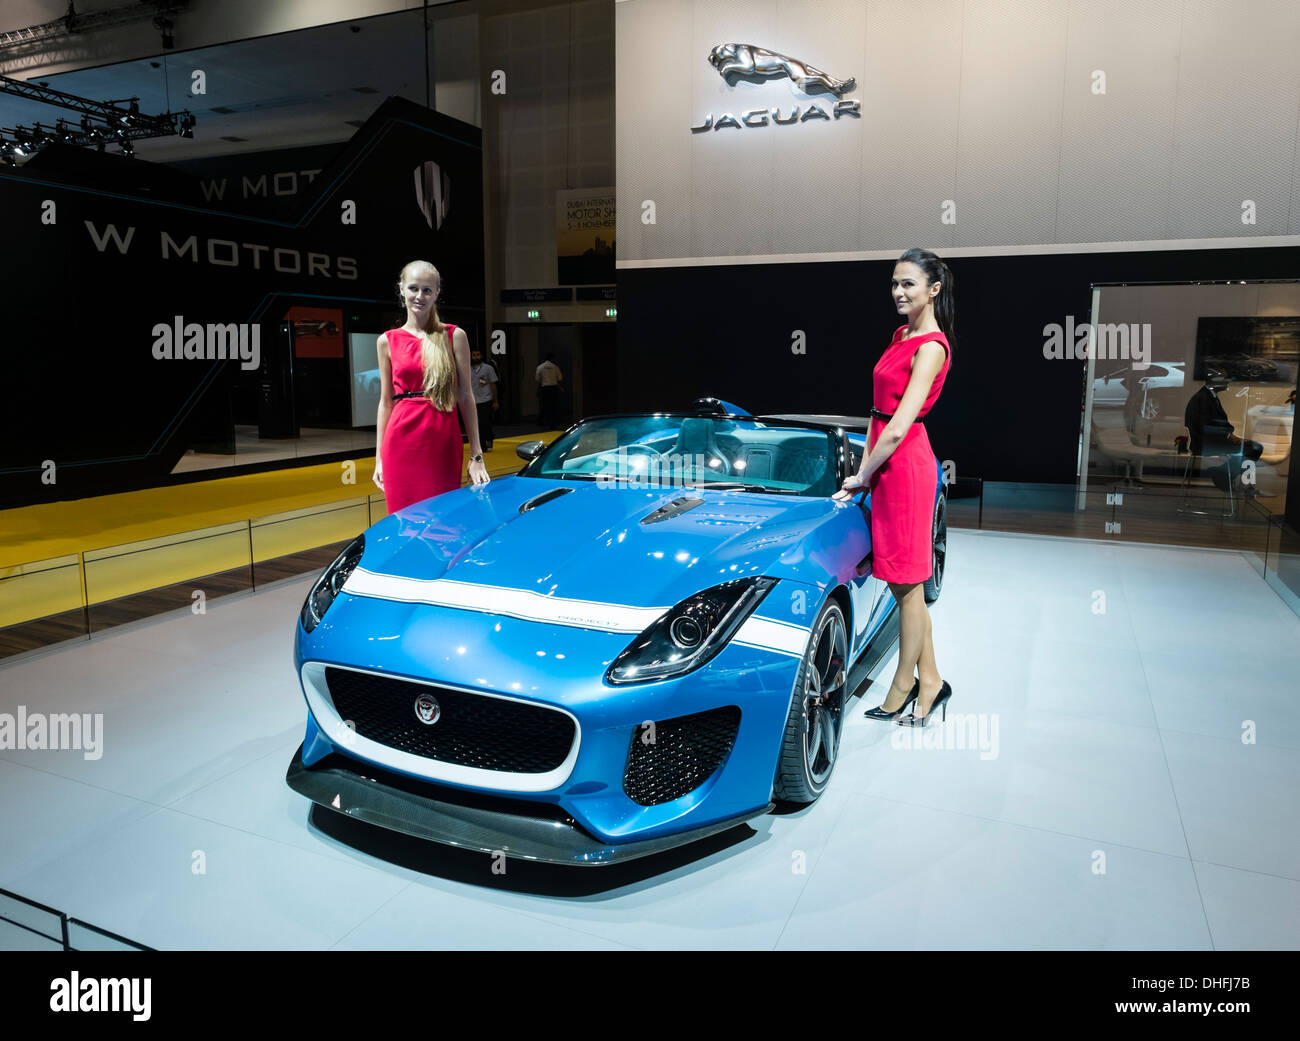 Proyecto 7 Concepto de automóvil Jaguar en el Dubai Motor Show 2013 Emiratos Arabes Unidos Foto de stock